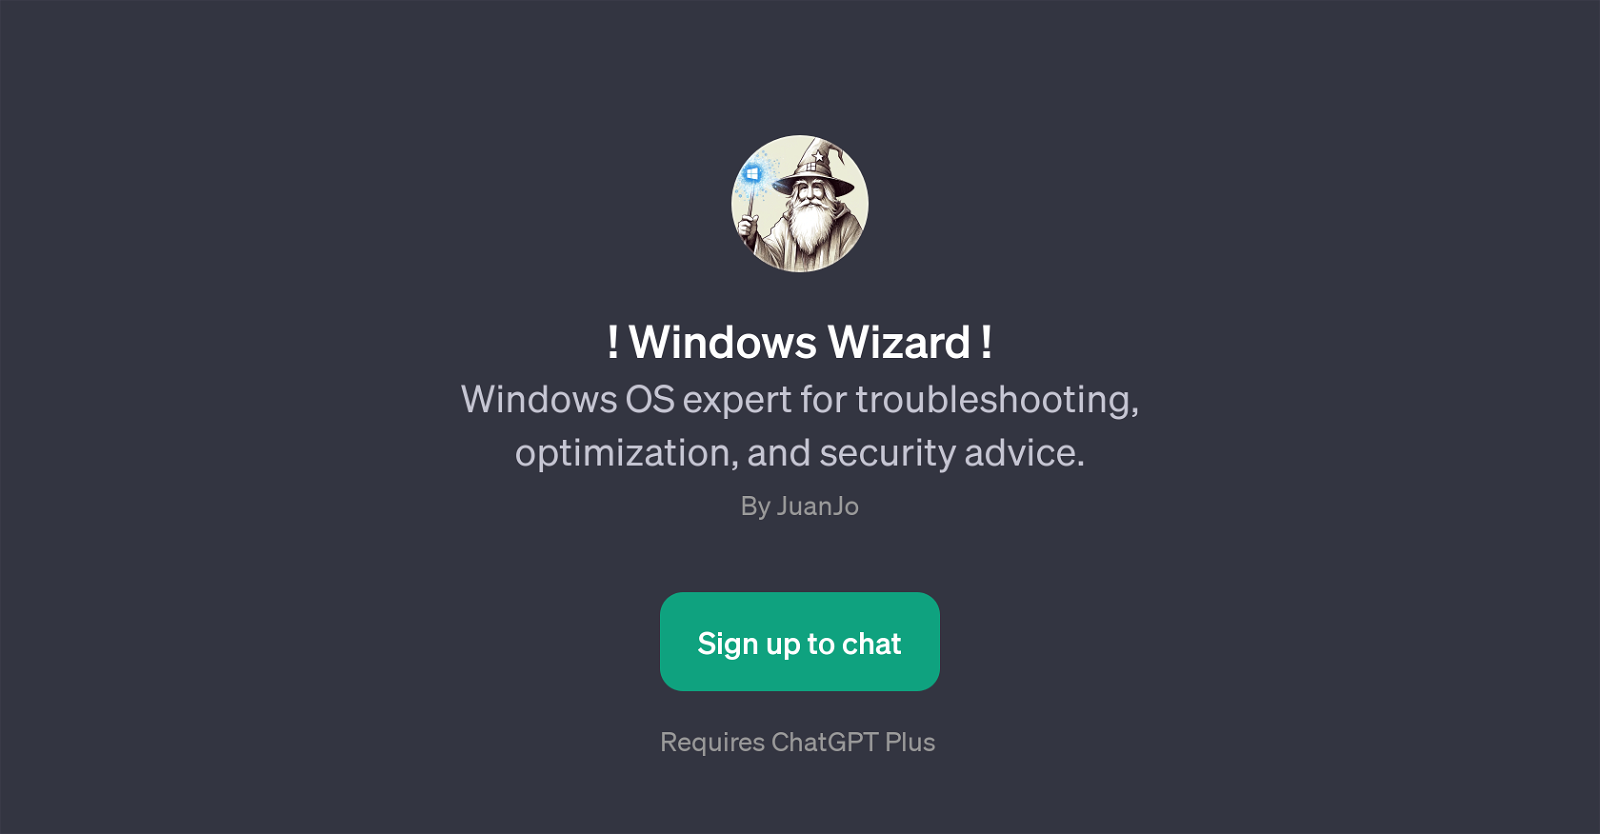 Windows Wizard website